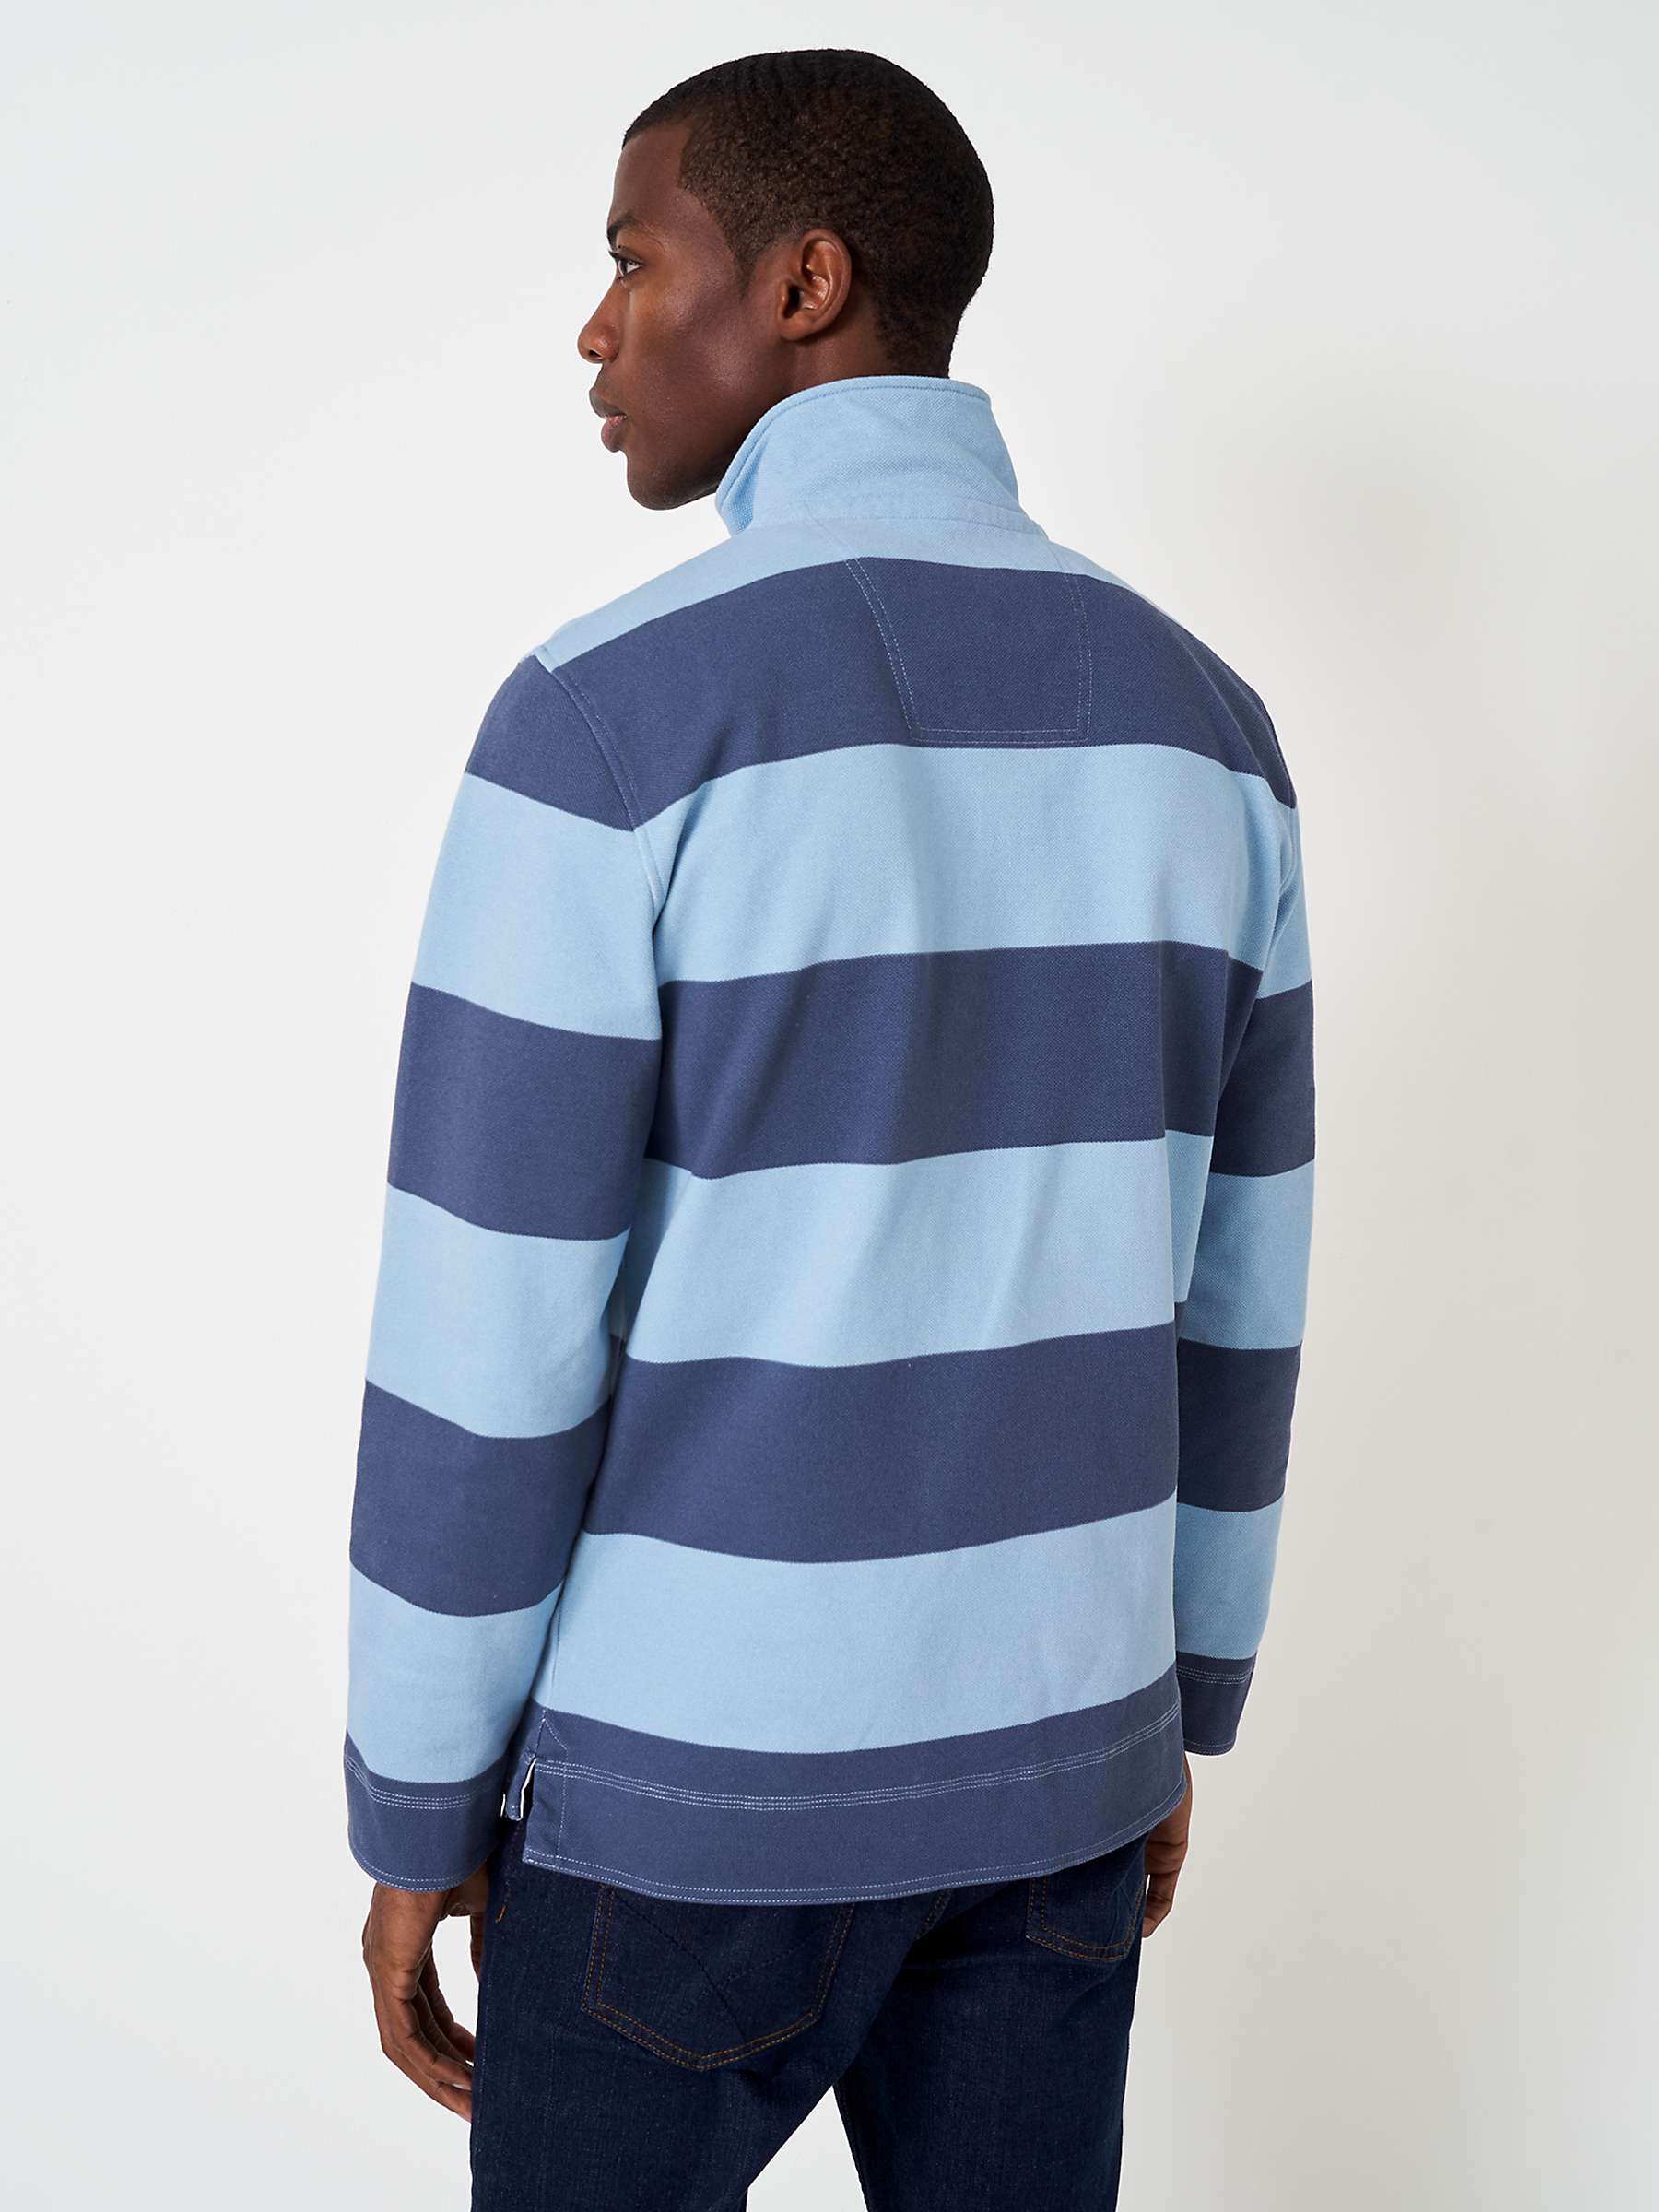 Crew Clothing Padstow Pique Sweatshirt, Multi/Blue at John Lewis & Partners